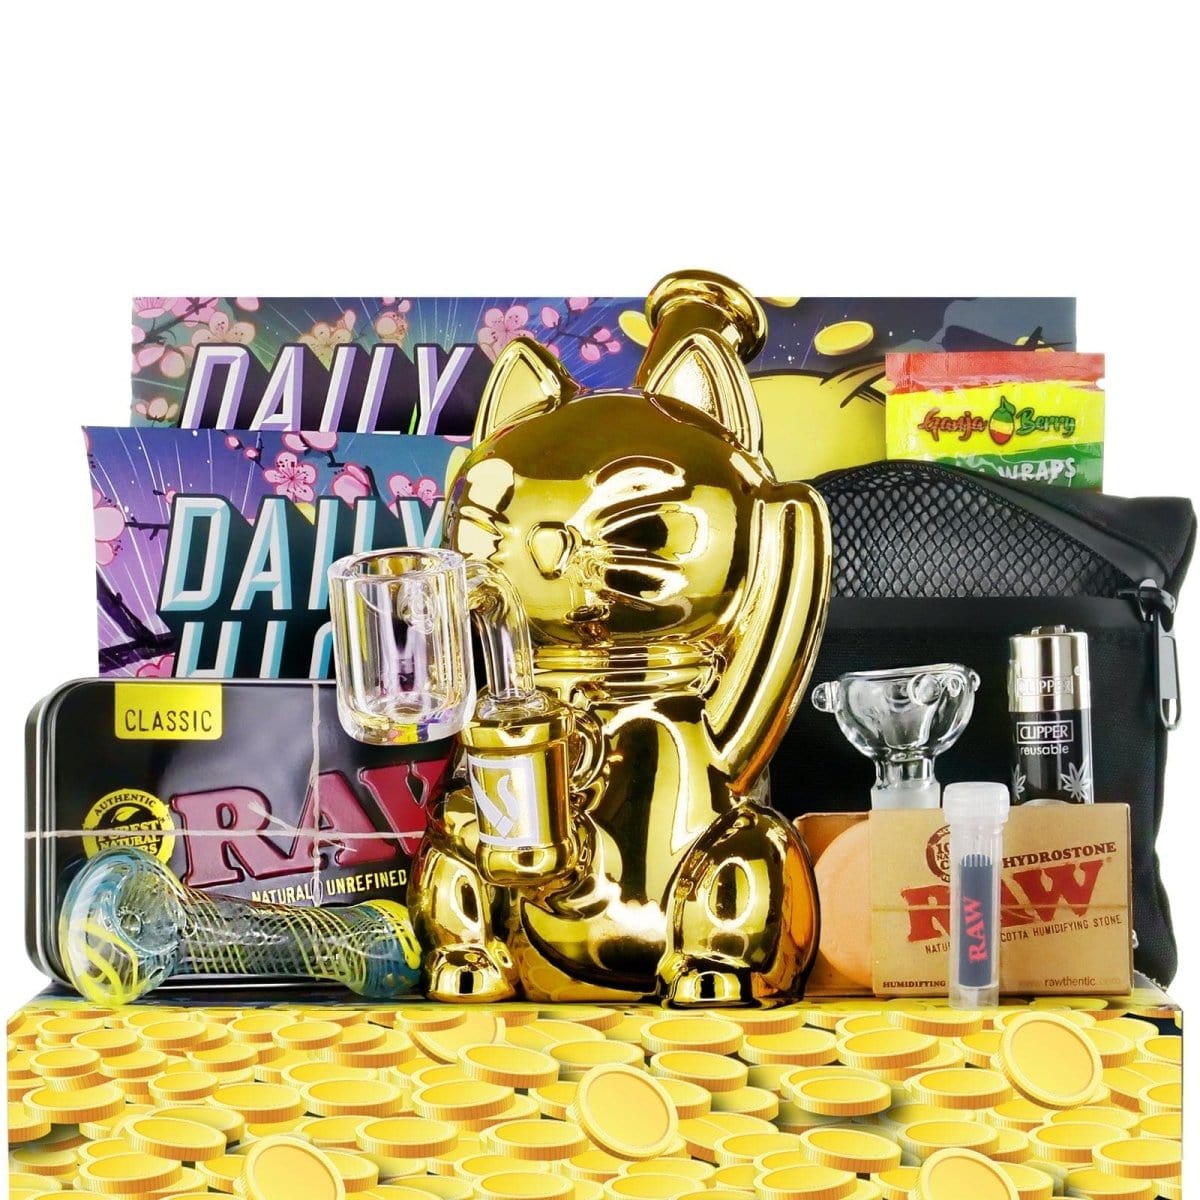 Daily High Club subscription box "Lucky Cat" Smoking Box